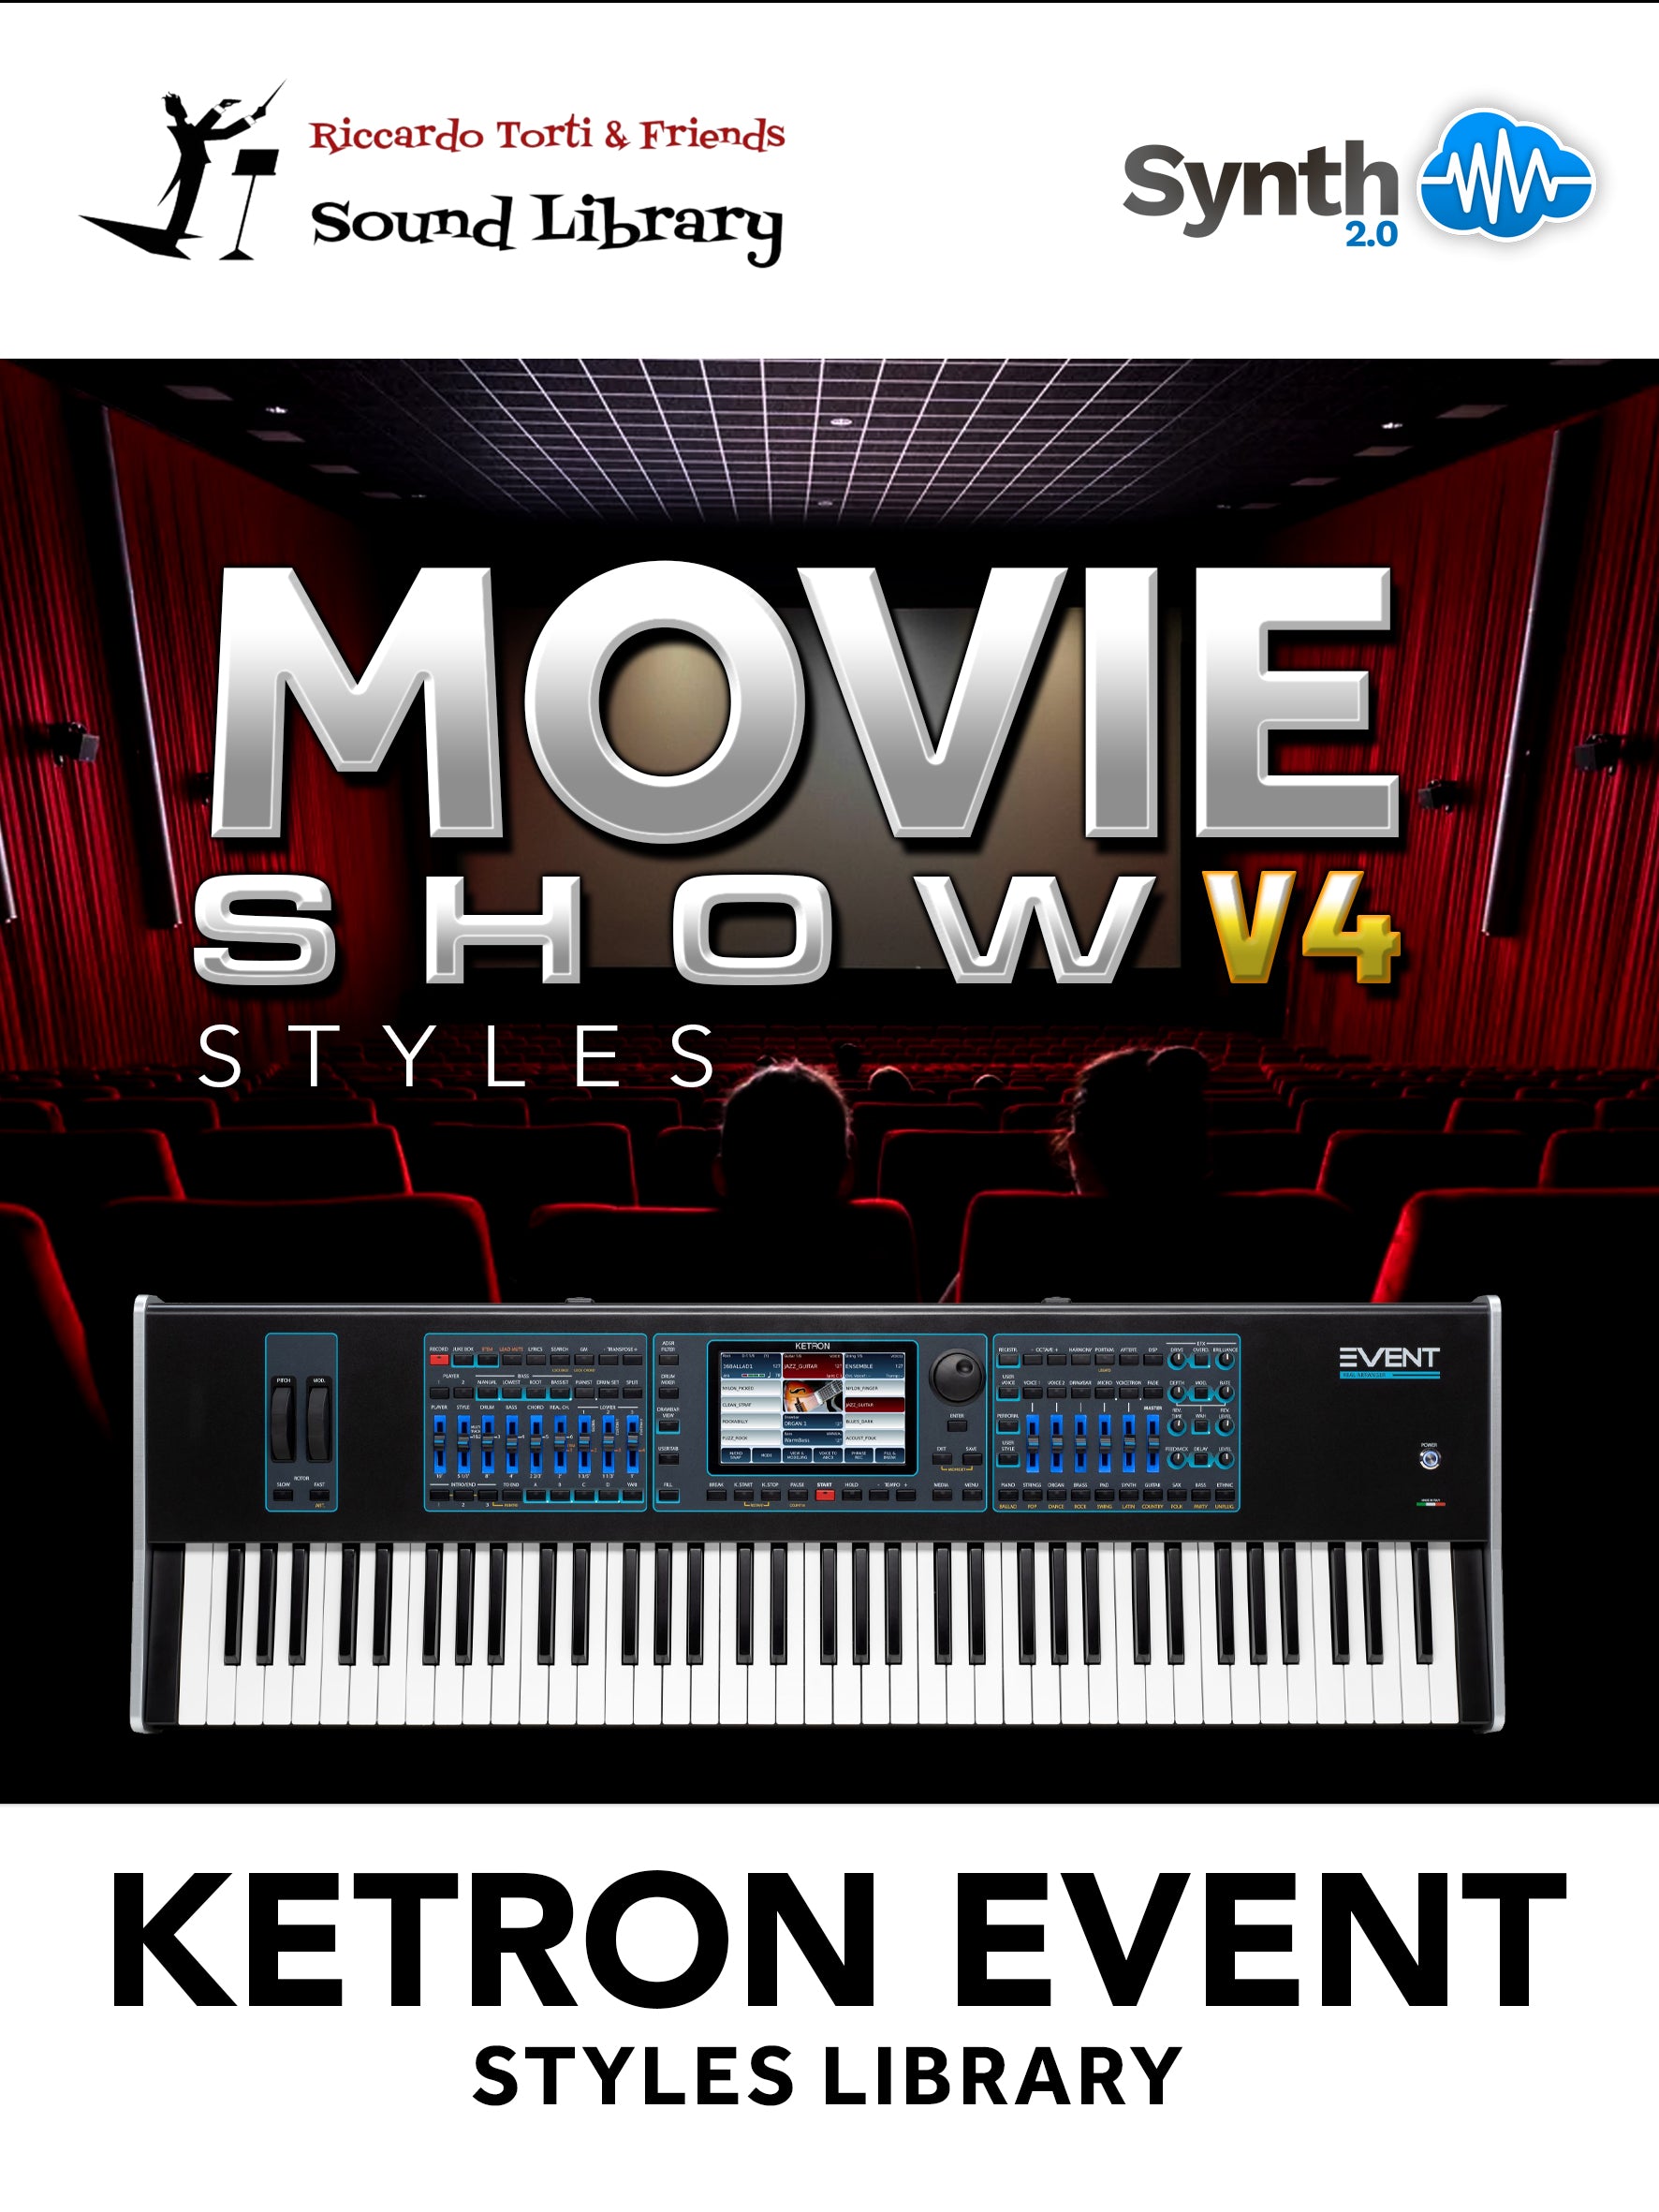 EVS004 - Movie Show V4 - Ketron Event ( 8 new styles )